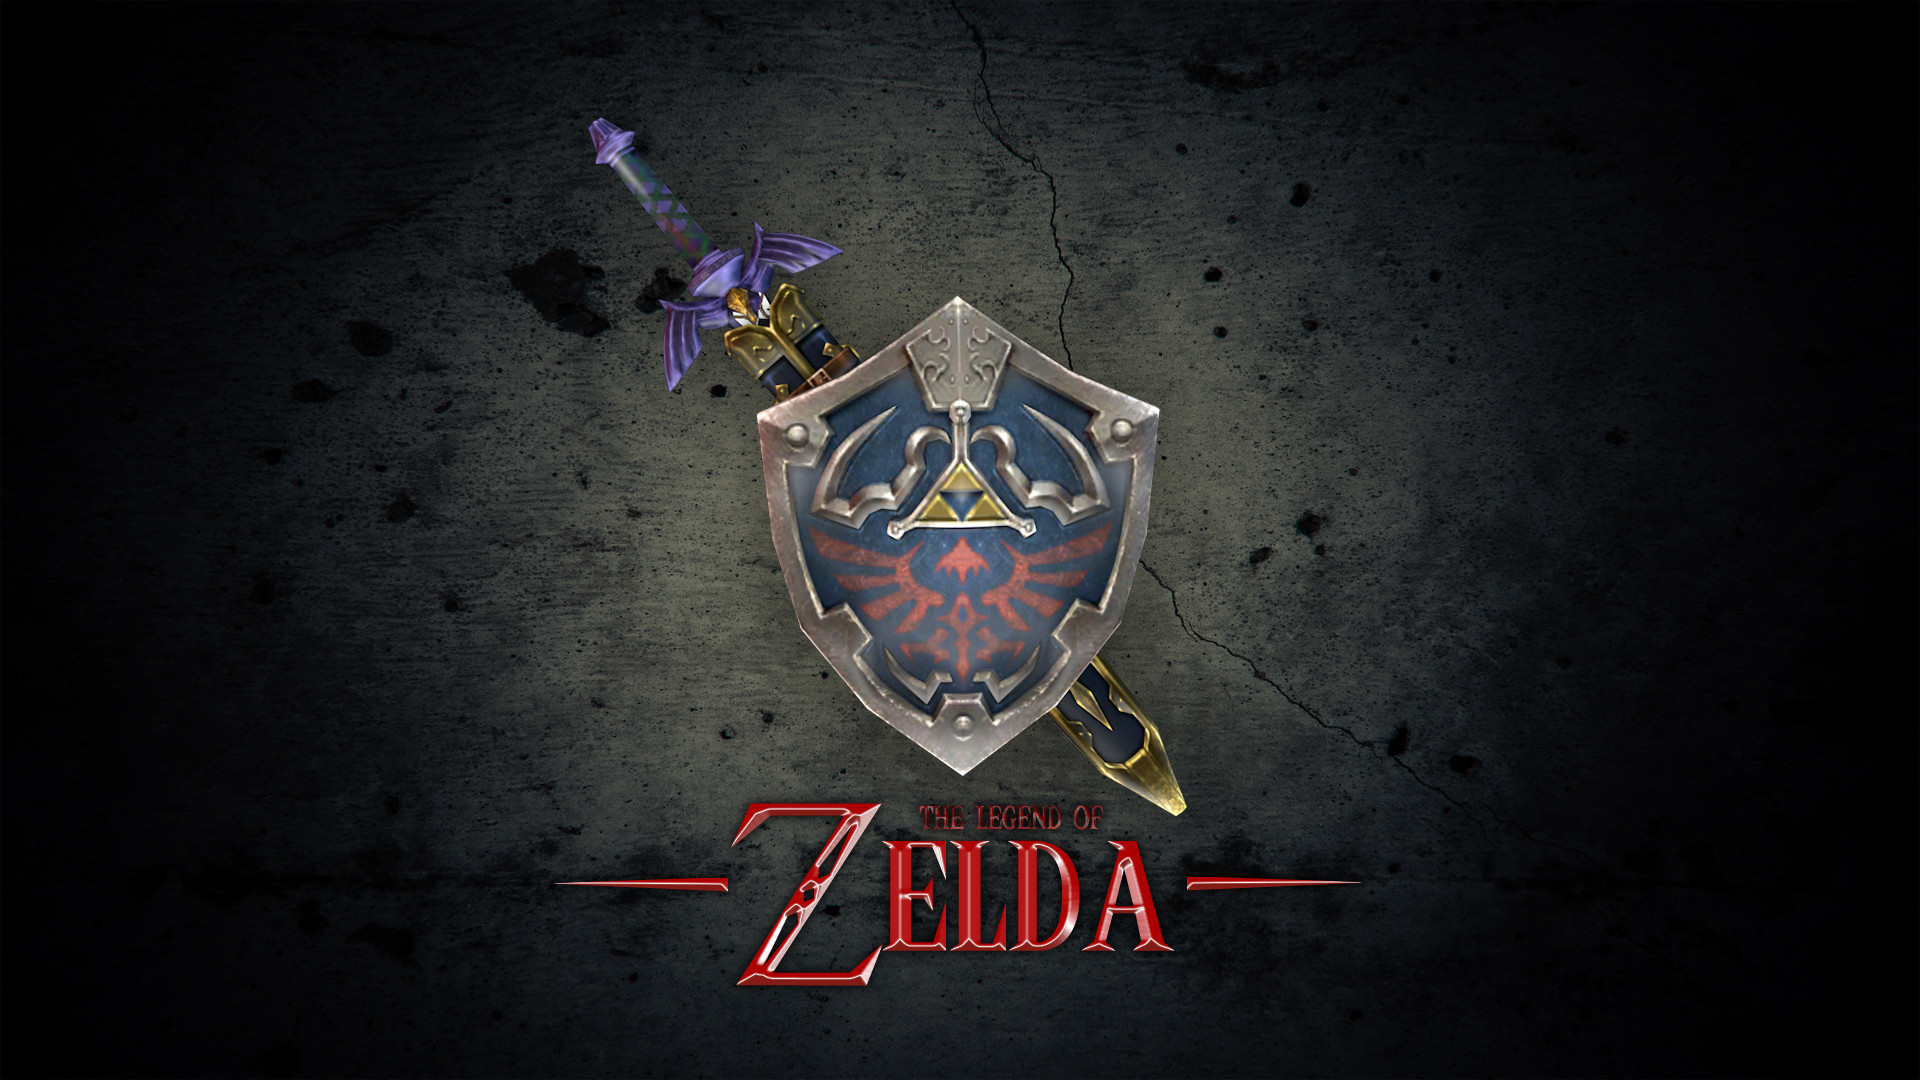 General 1920x1080 The Legend of Zelda Nintendo Master Sword Hylian Shield video games